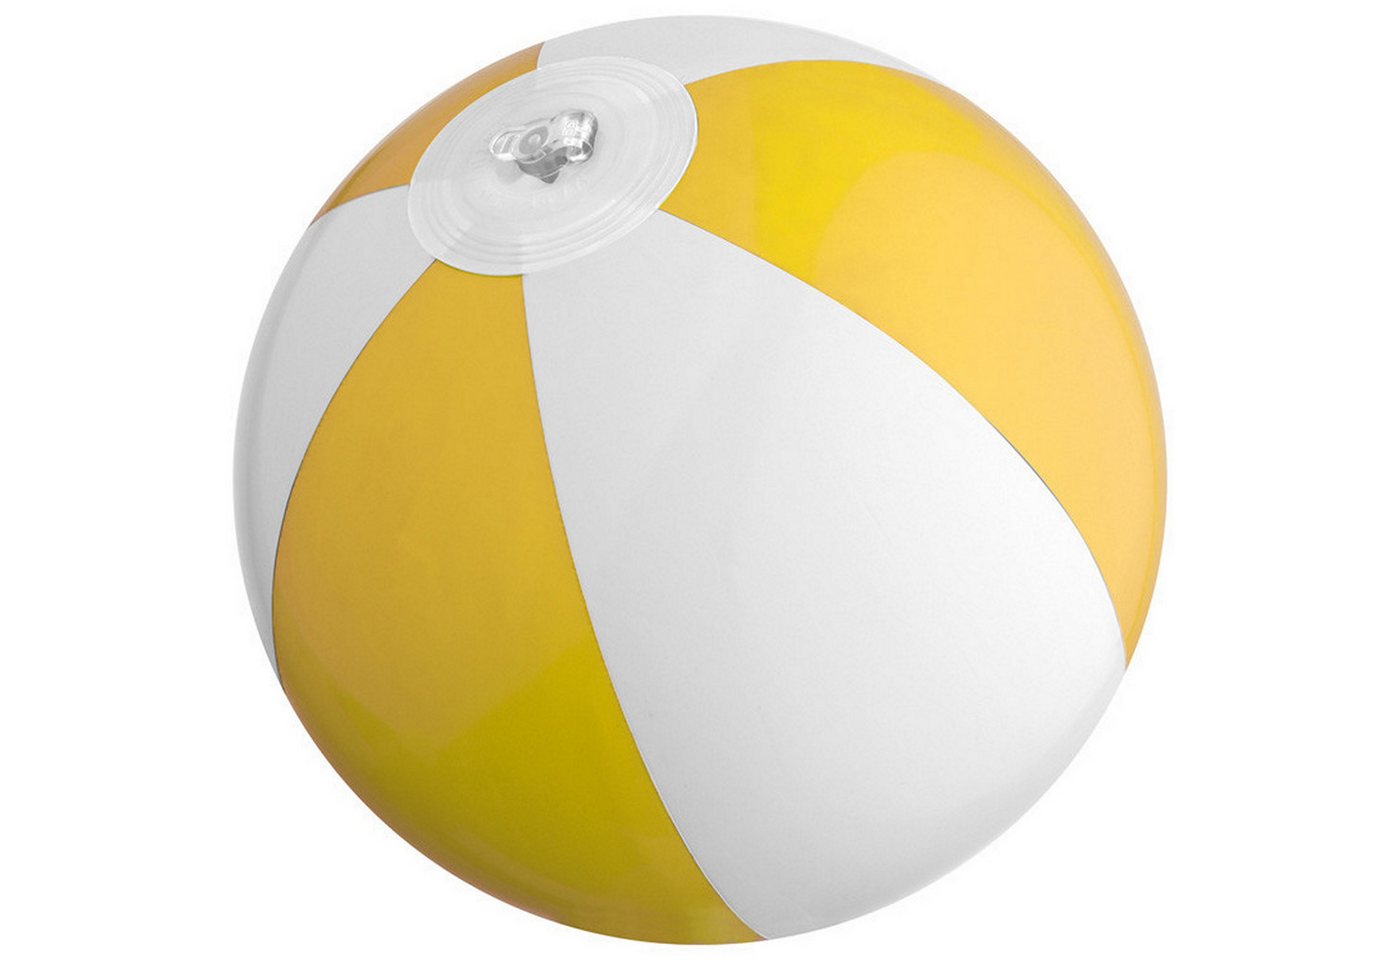 Livepac Office Wasserball Mini Strandball / Wasserball / Farbe: gelb-weiß von Livepac Office